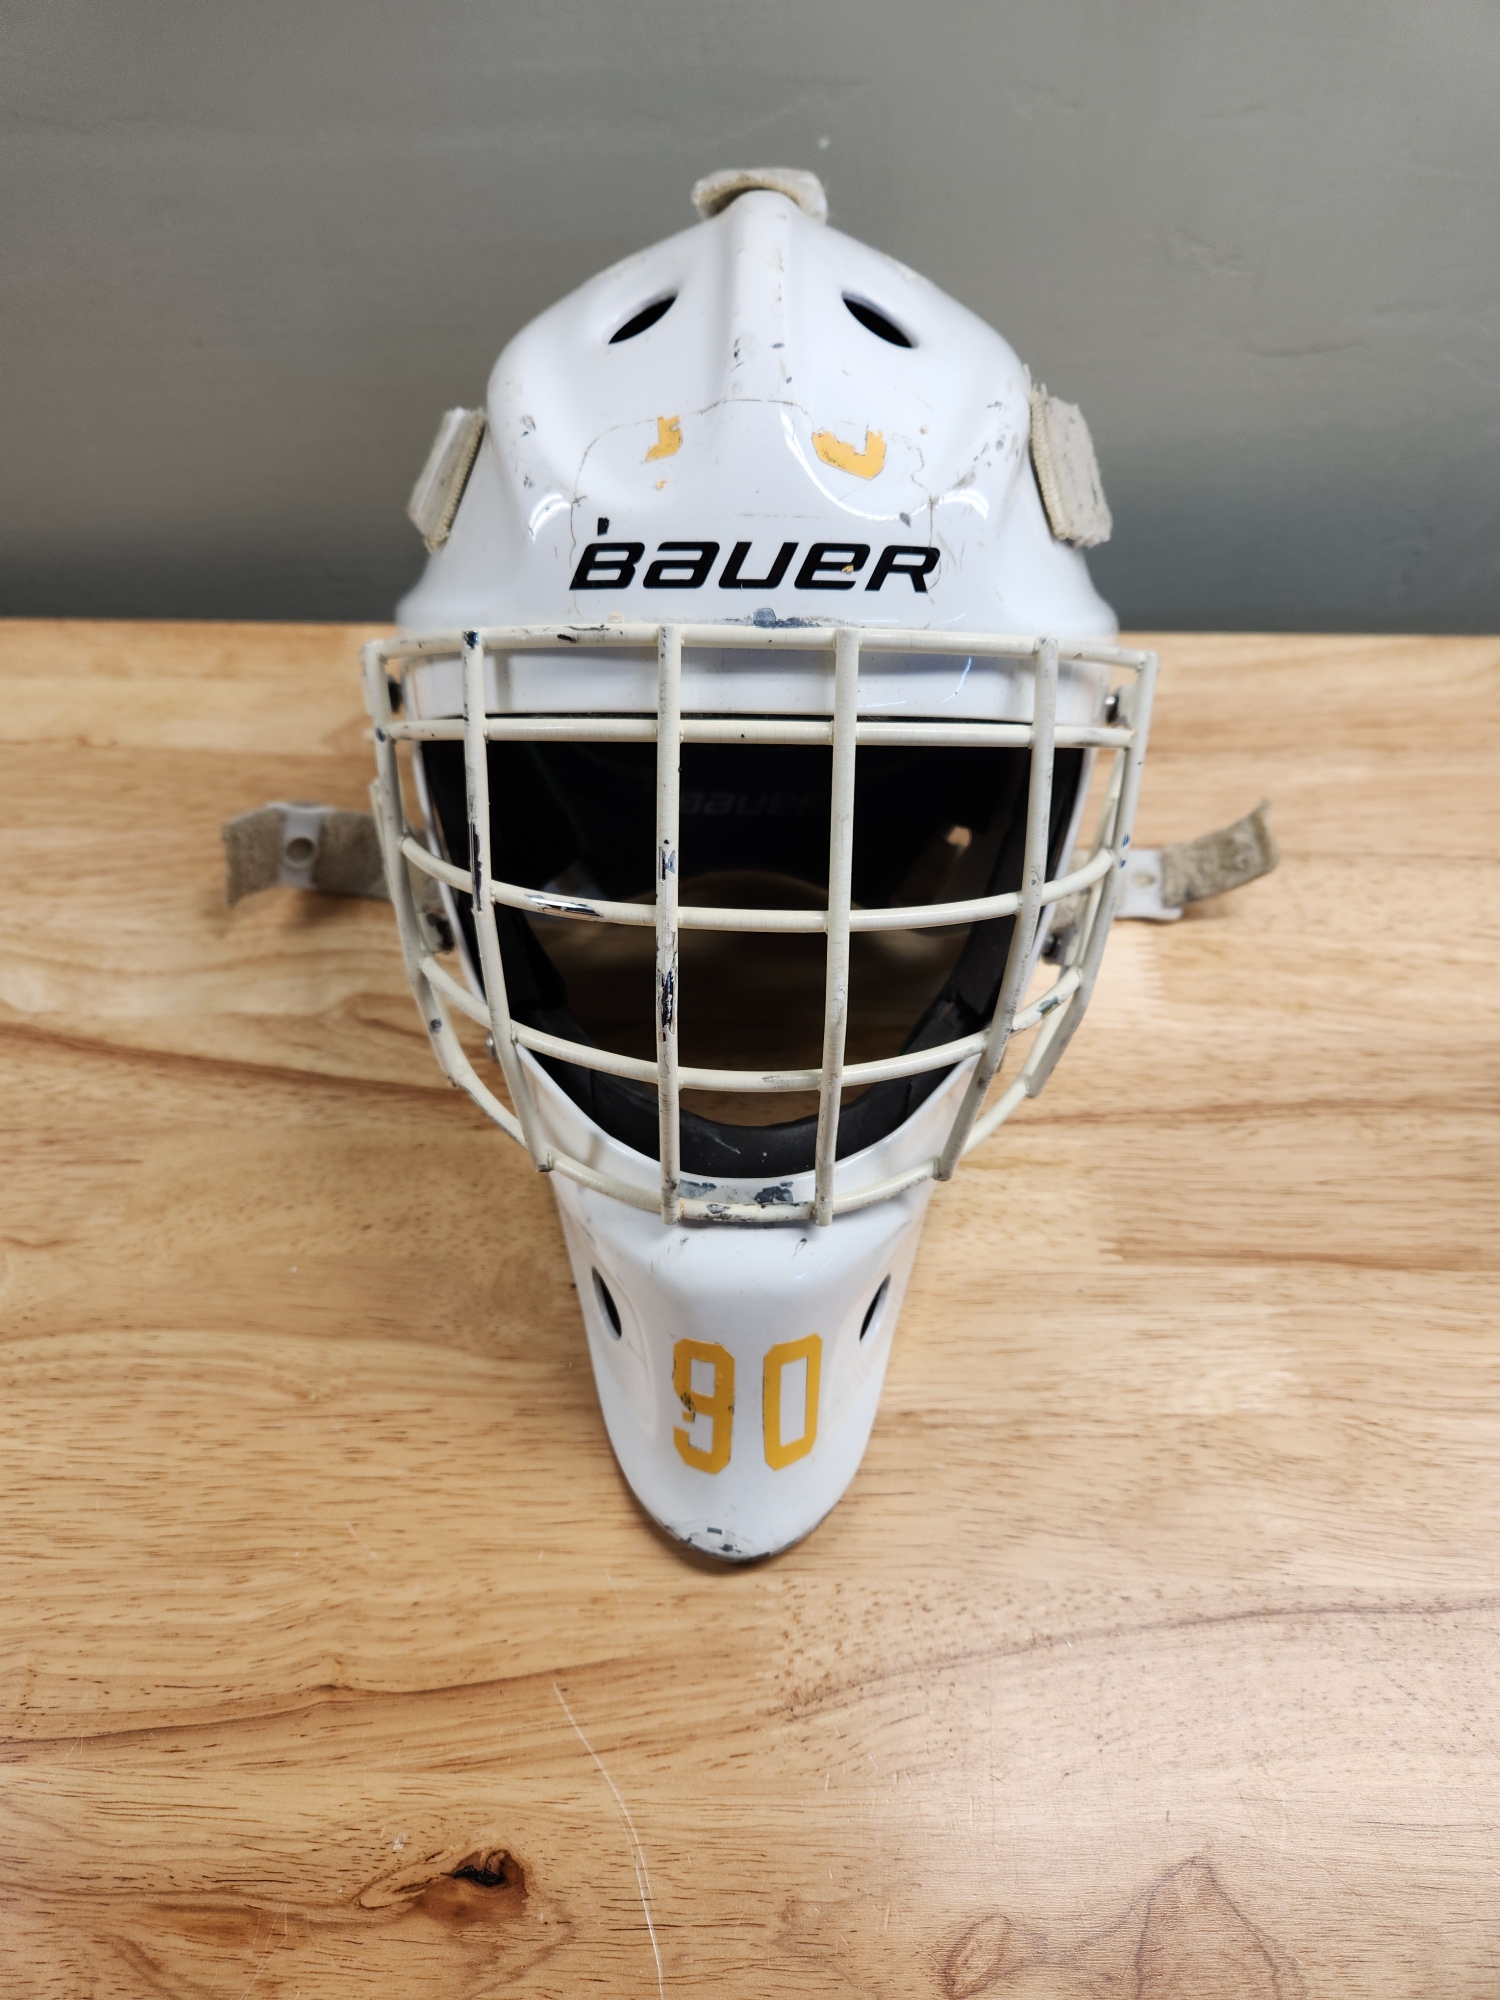 Bauer NME IX Fit 1 Goalie Mask